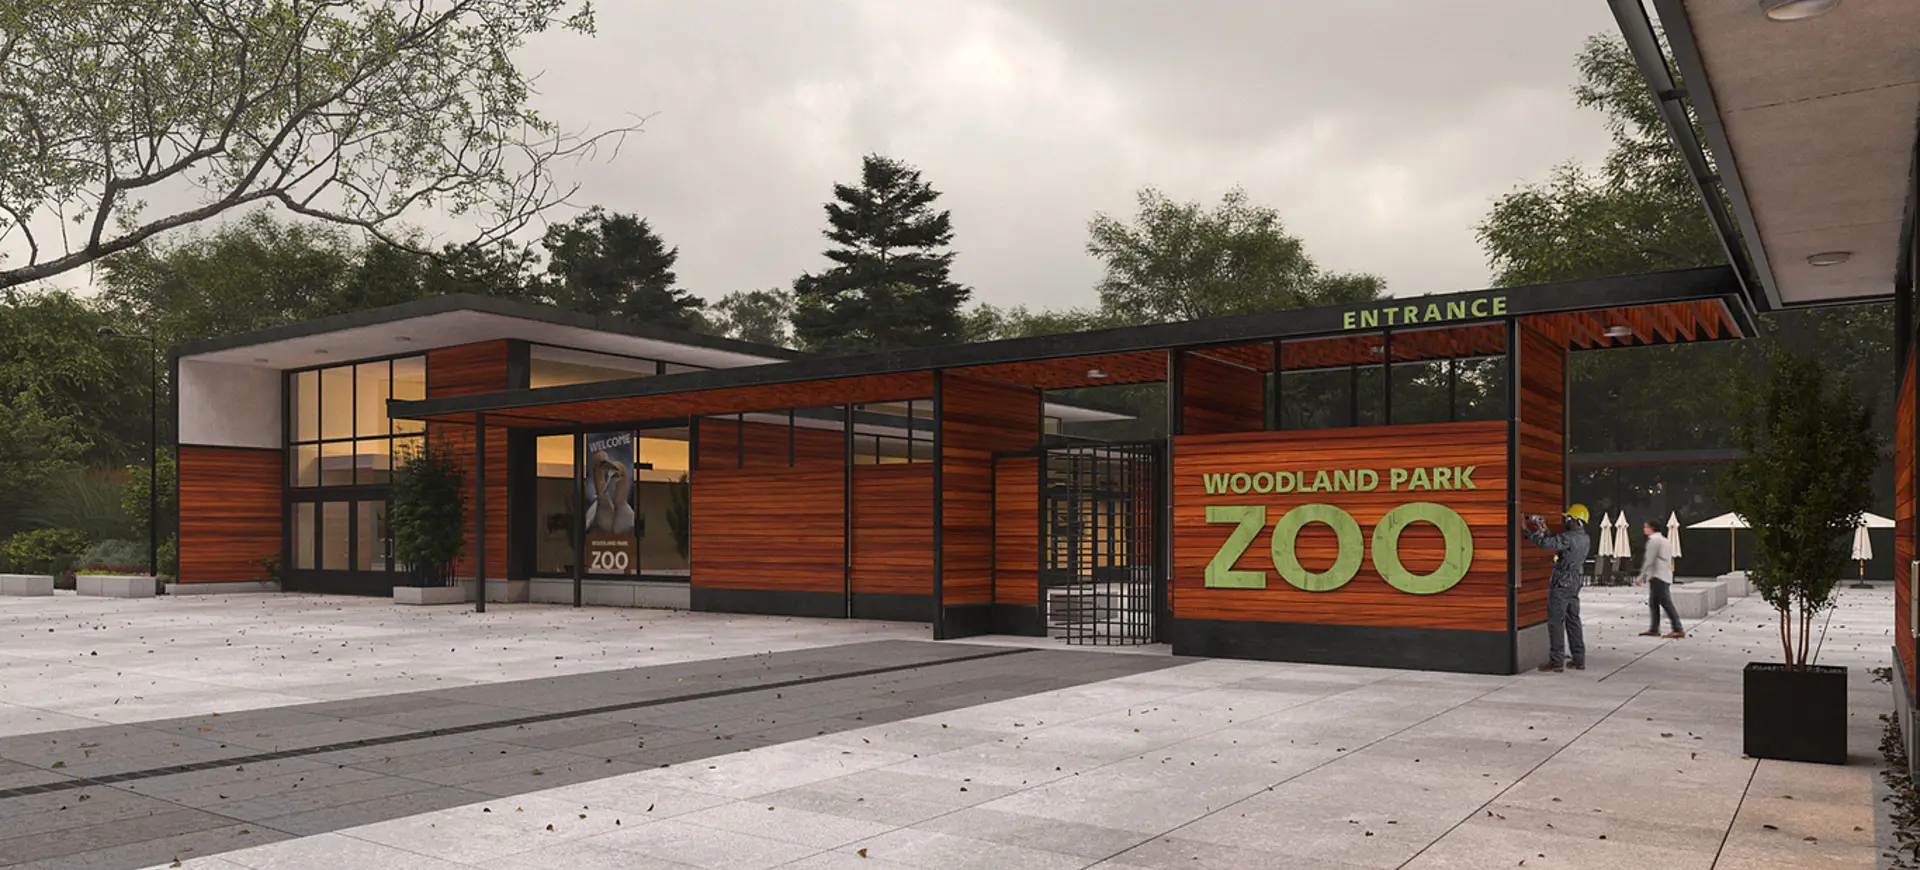 woodland park zoo